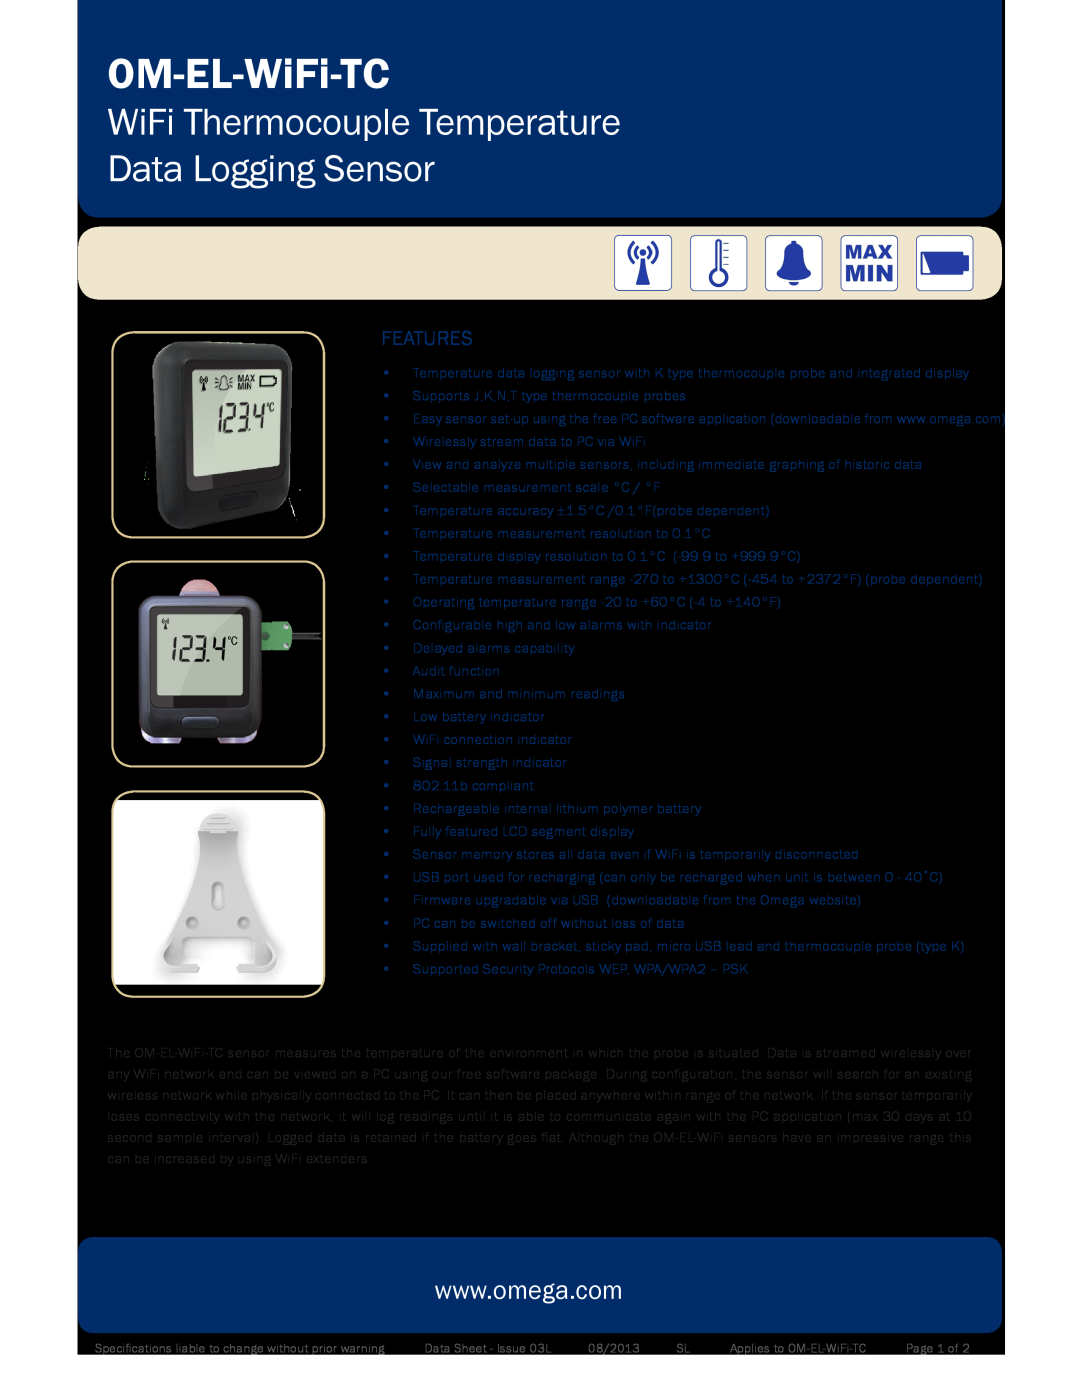 Omega Engineering ISD9001, ISO9001 warranty OM-EL-WiFi-TC, WiFi Thermocouple Temperature Data Logging Sensor, Features 